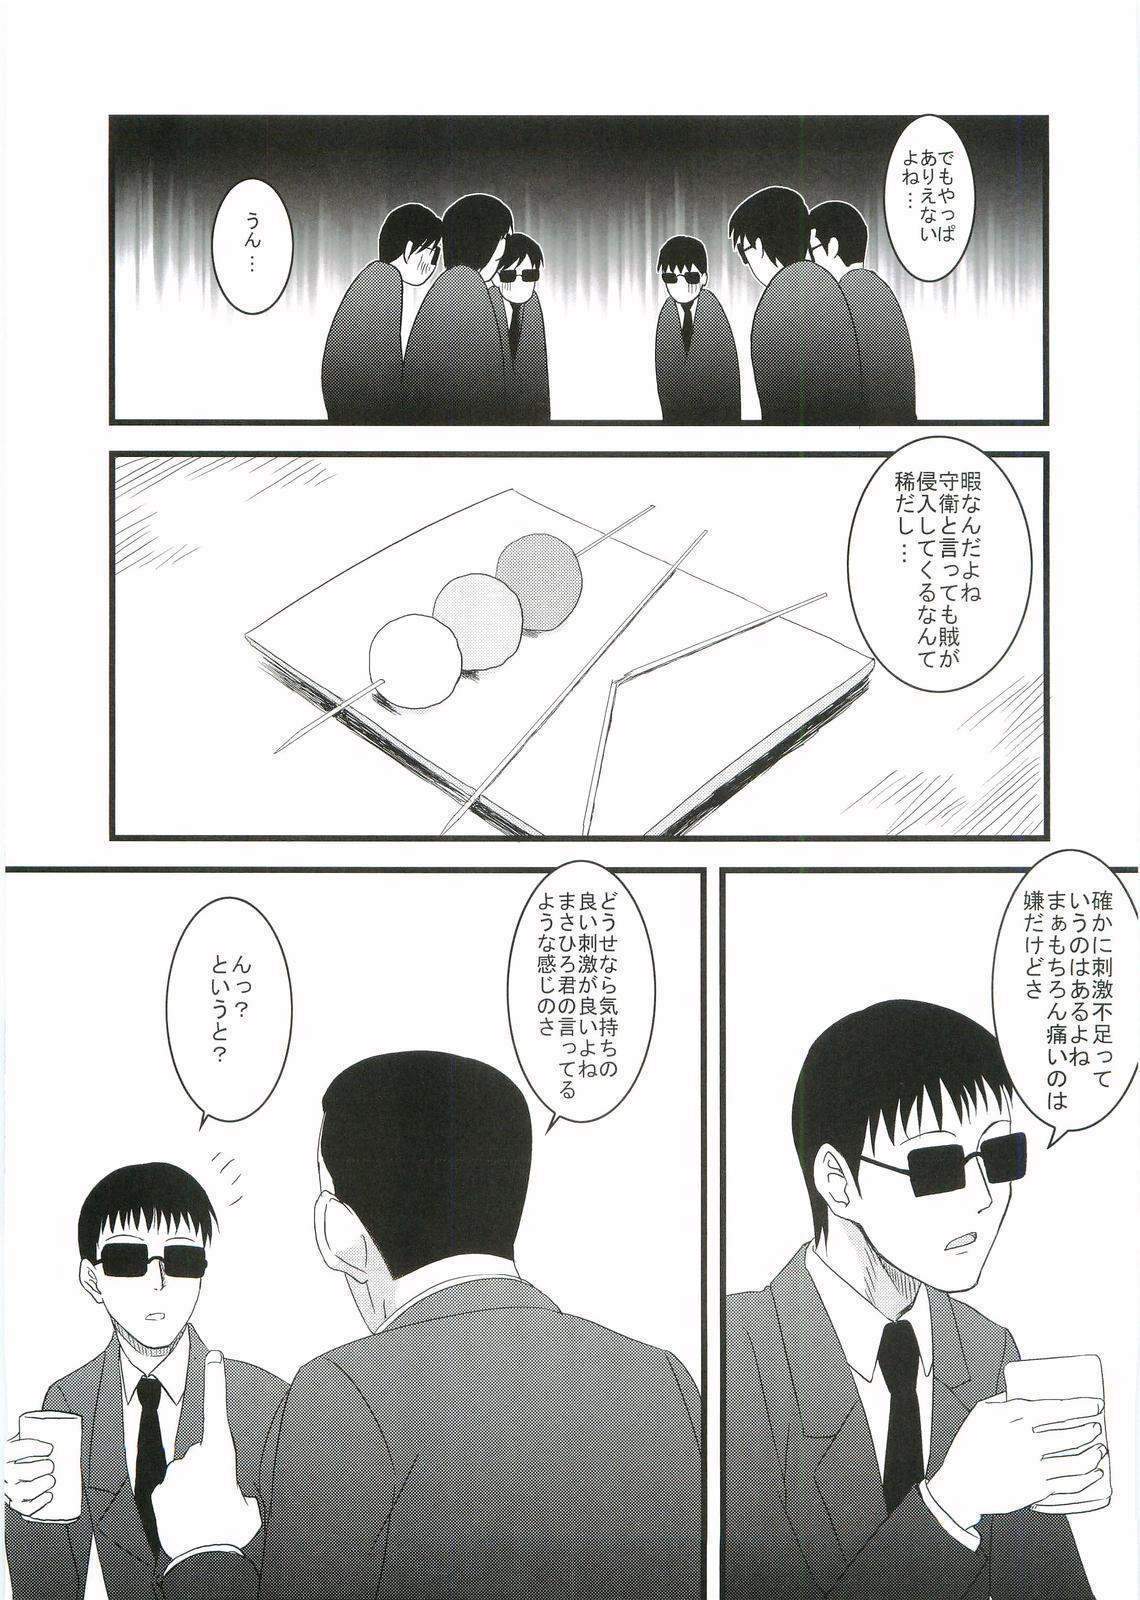 Banging Kouhukuya no Ehon Gokujo 2 - Gokujou seitokai Desperate - Page 8